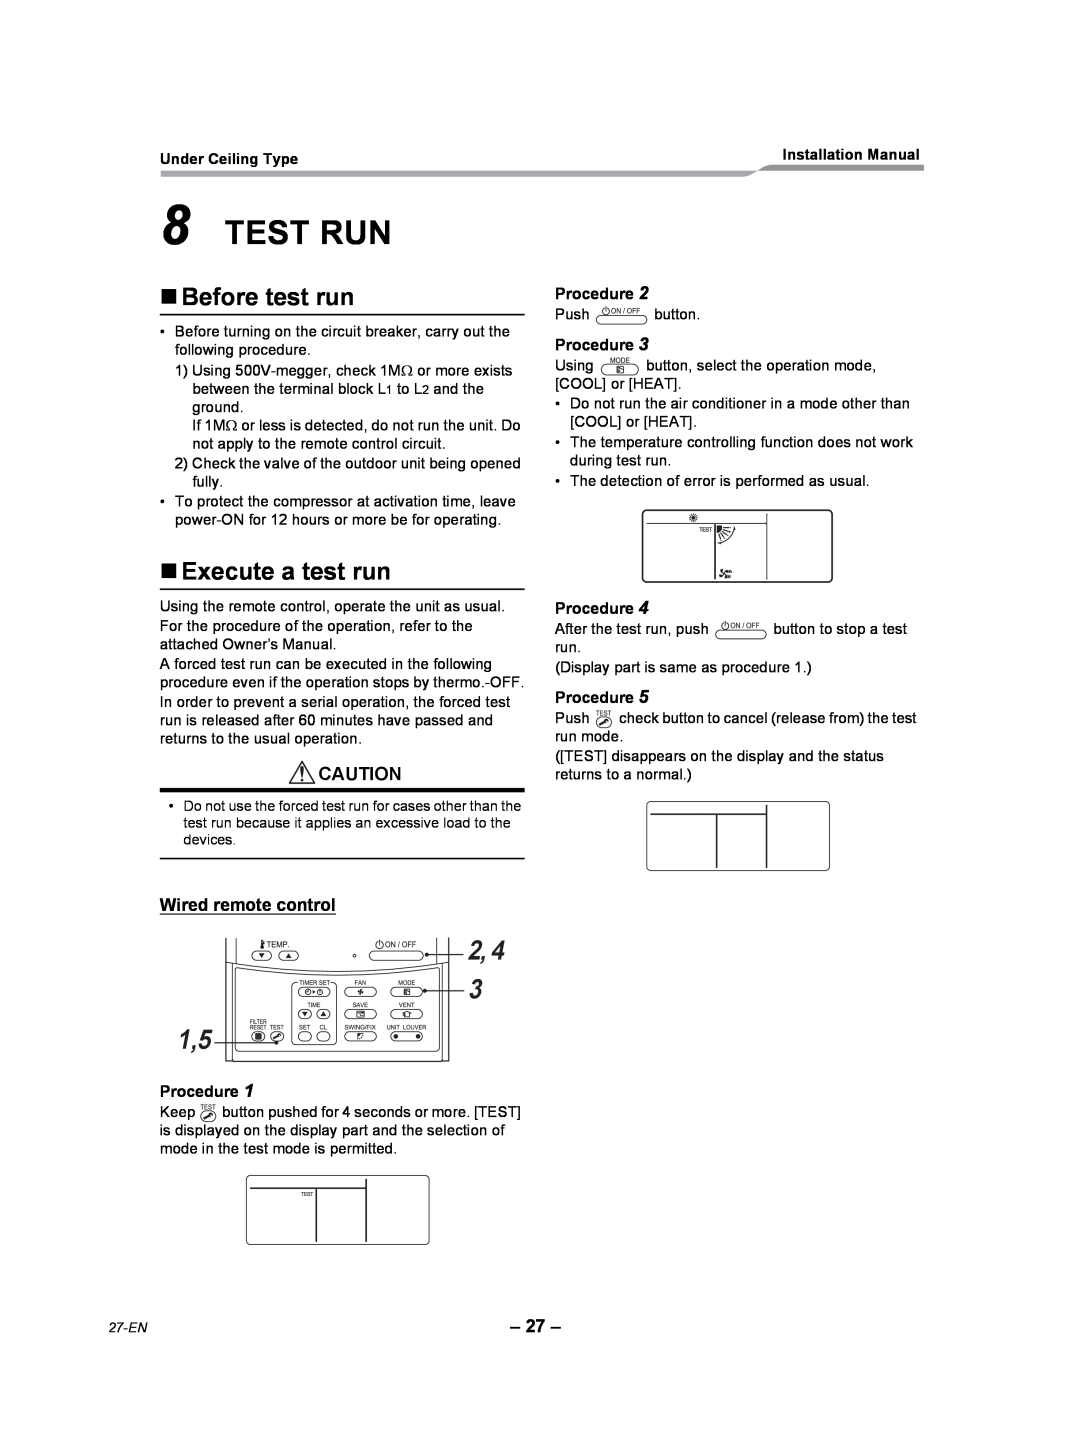 Toshiba RAV-SP240CT-UL Test Run, 2, 4 1,5, „Before test run, „Execute a test run, Wired remote control, Procedure 